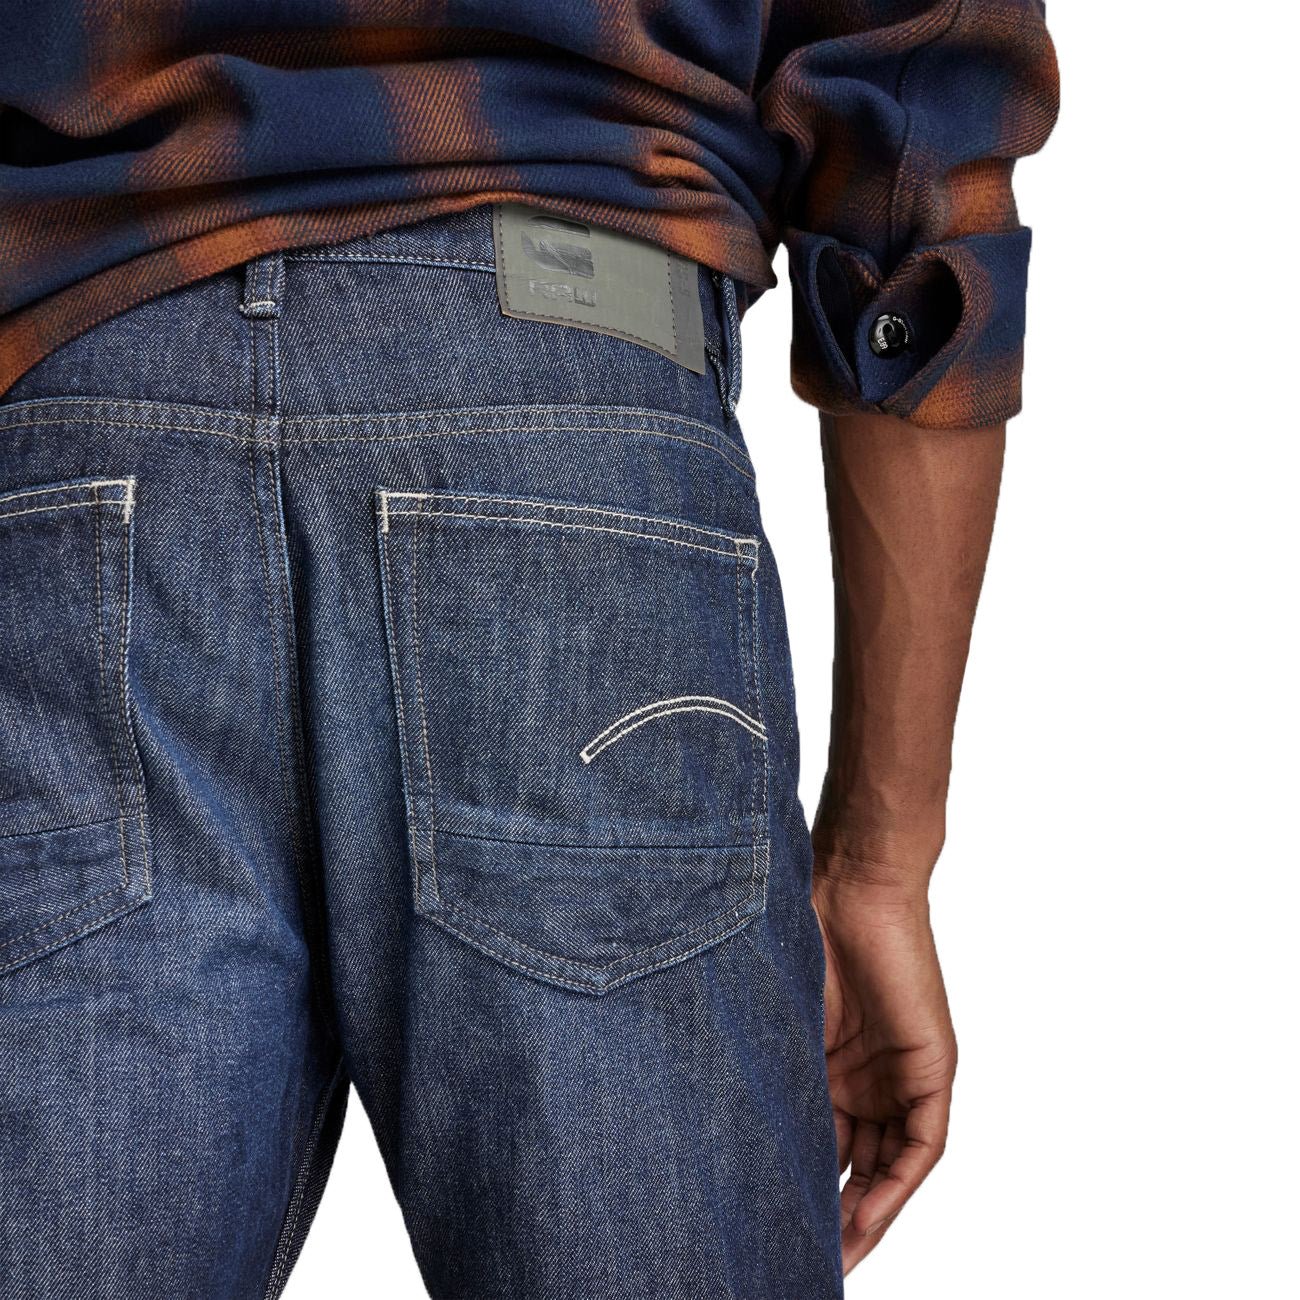 G-STAR RAW DENIM TRIPLE A REGULAR STRAIGHT worn in pacific Herren Jeans - G-Star Raw Denim - SAGATOO - 8720346737485